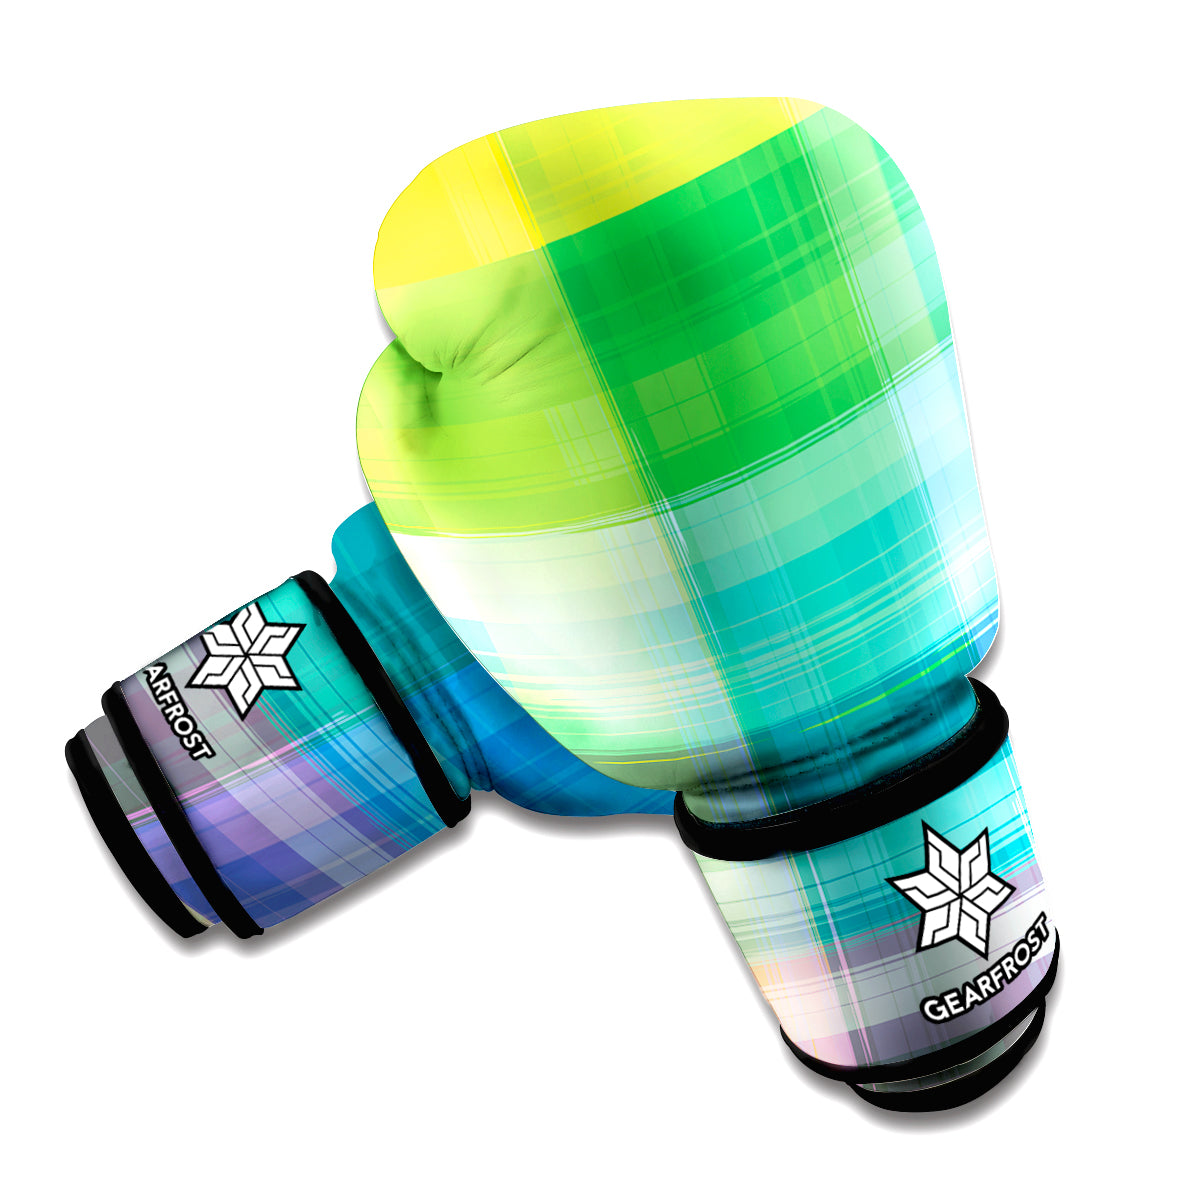 LGBT Pride Rainbow Plaid Pattern Print Boxing Gloves